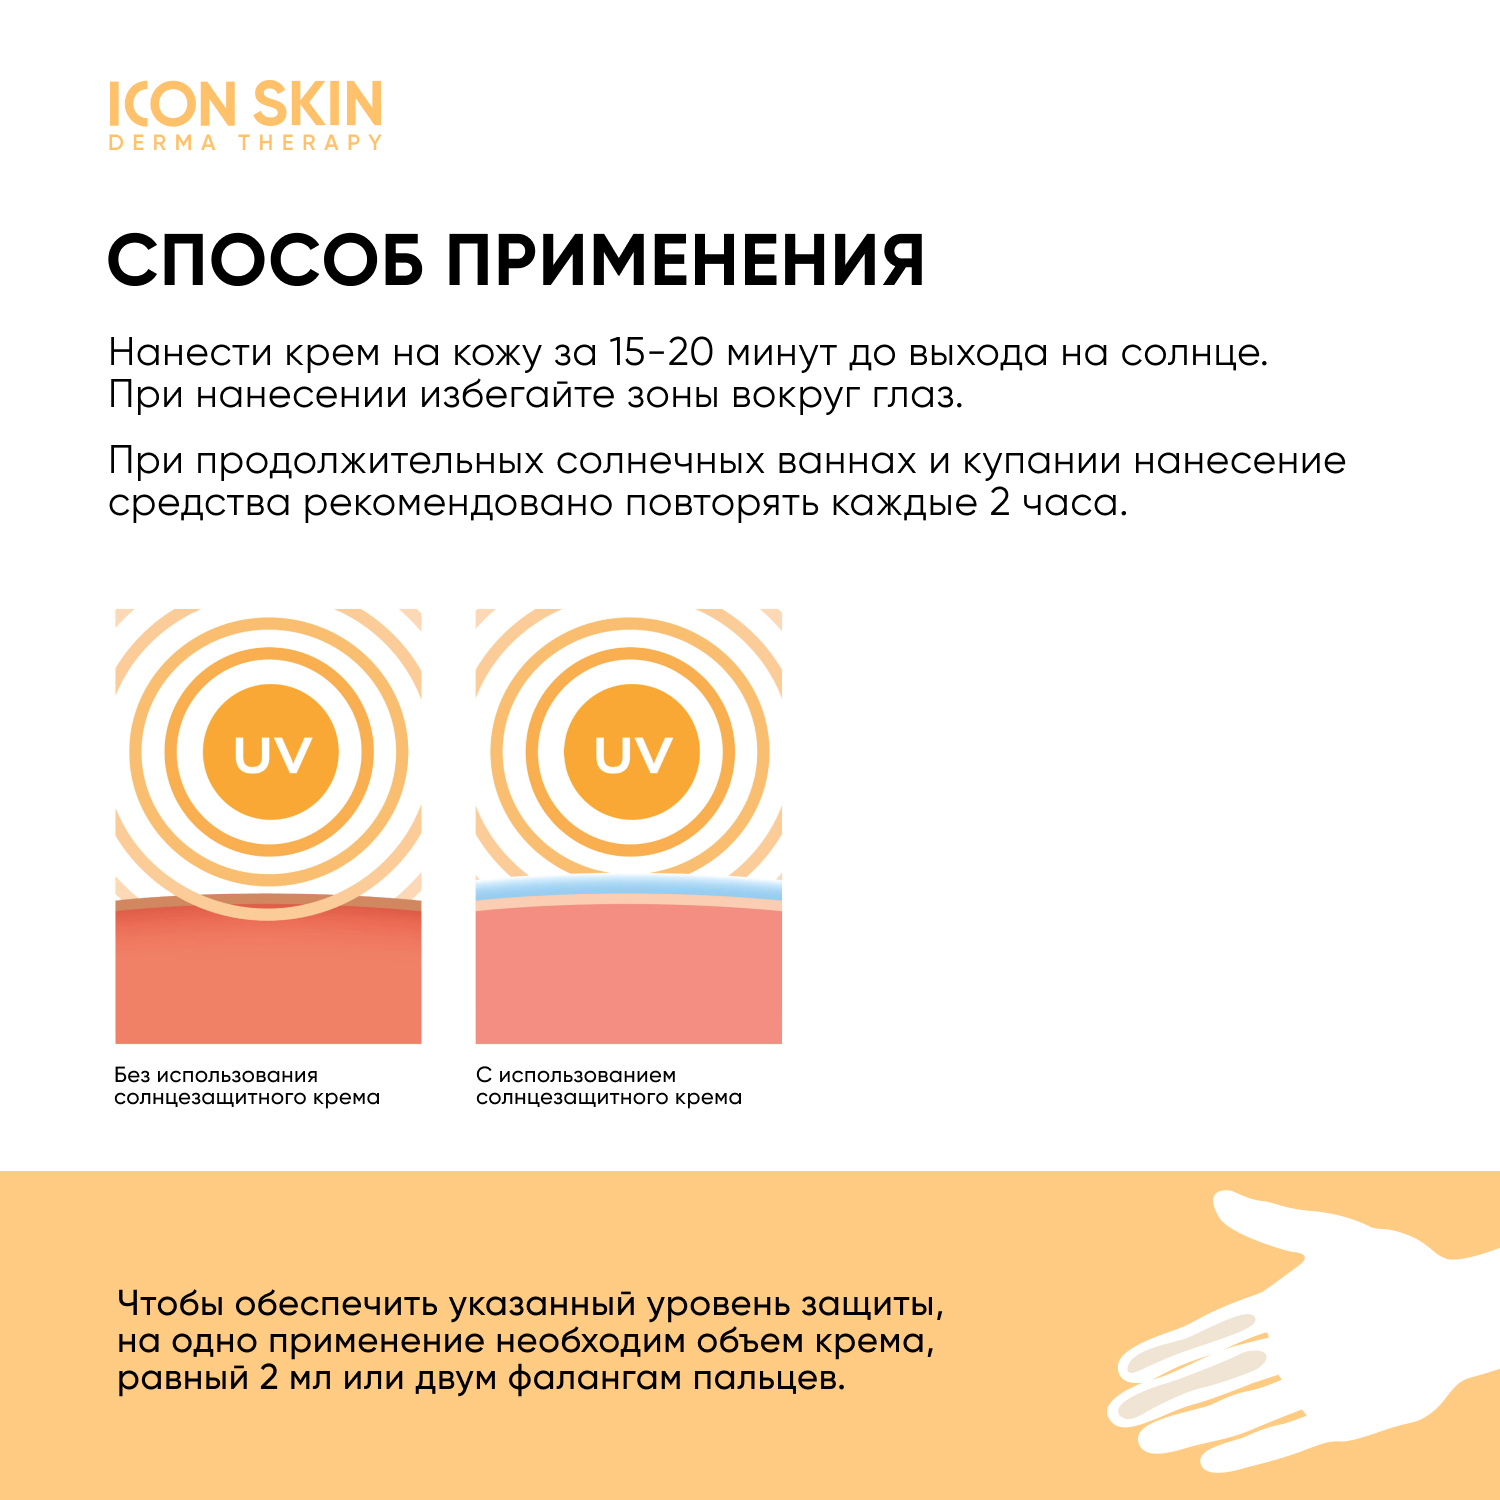 Солнцезащитный крем для лица ICON SKIN SPF 50 увлажняющий для всех типов кожи 50 мл - фото 6